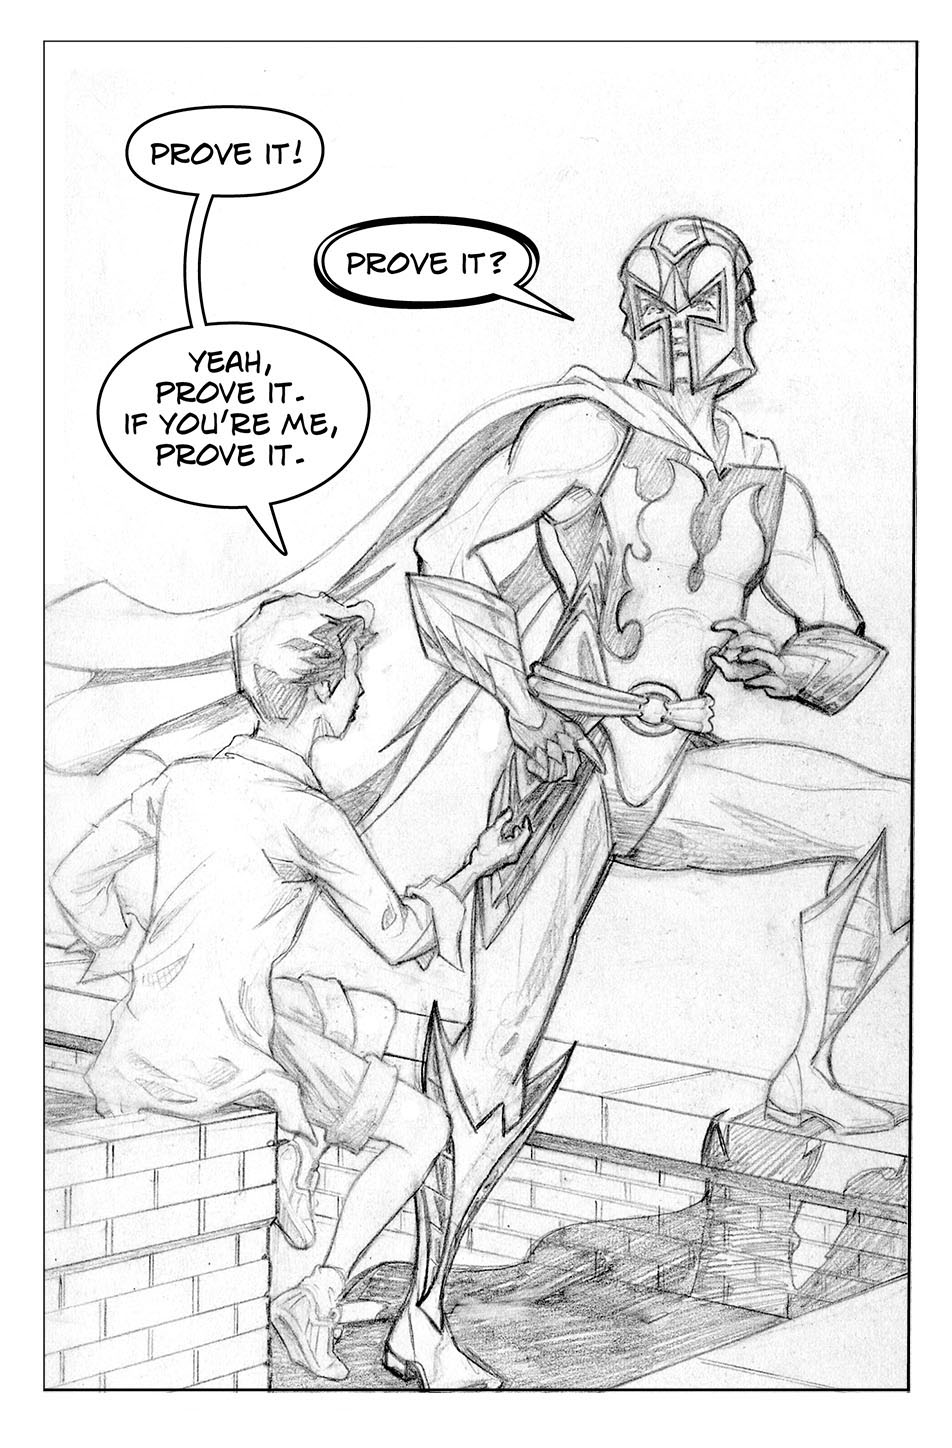 Christian Superhero Comics